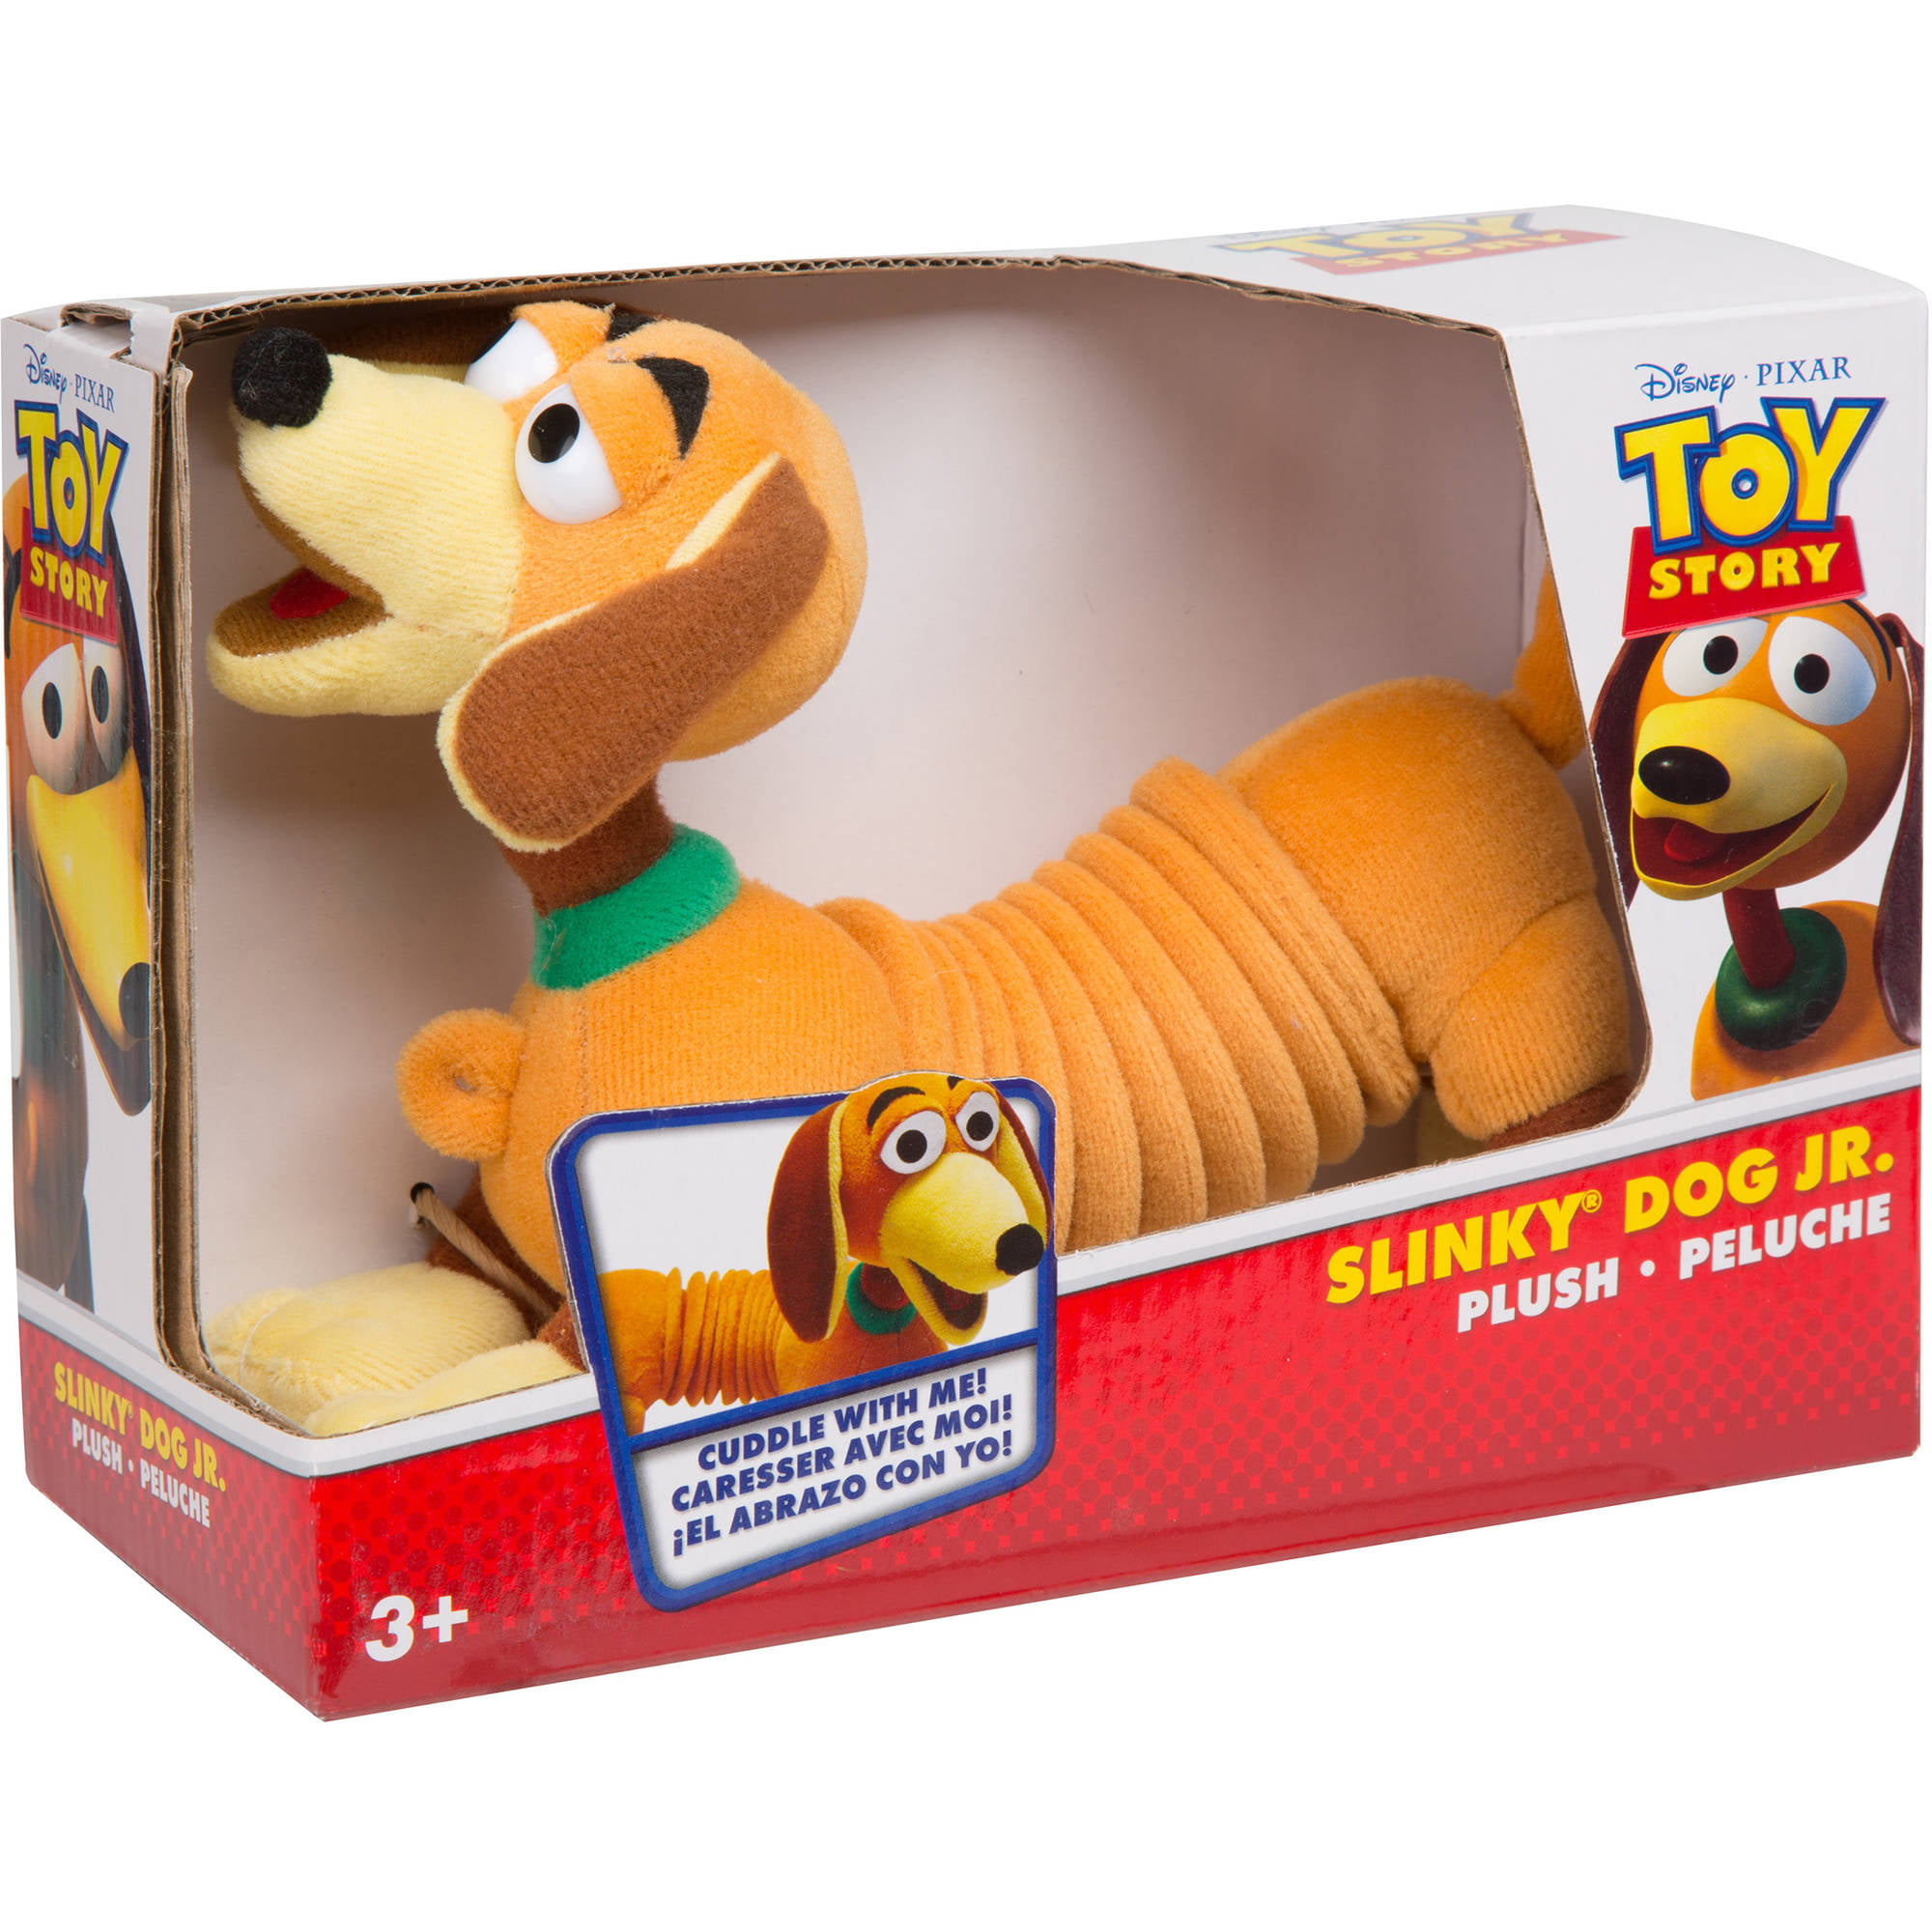 Disney Pixar Toy Story Slinky Dog Jr